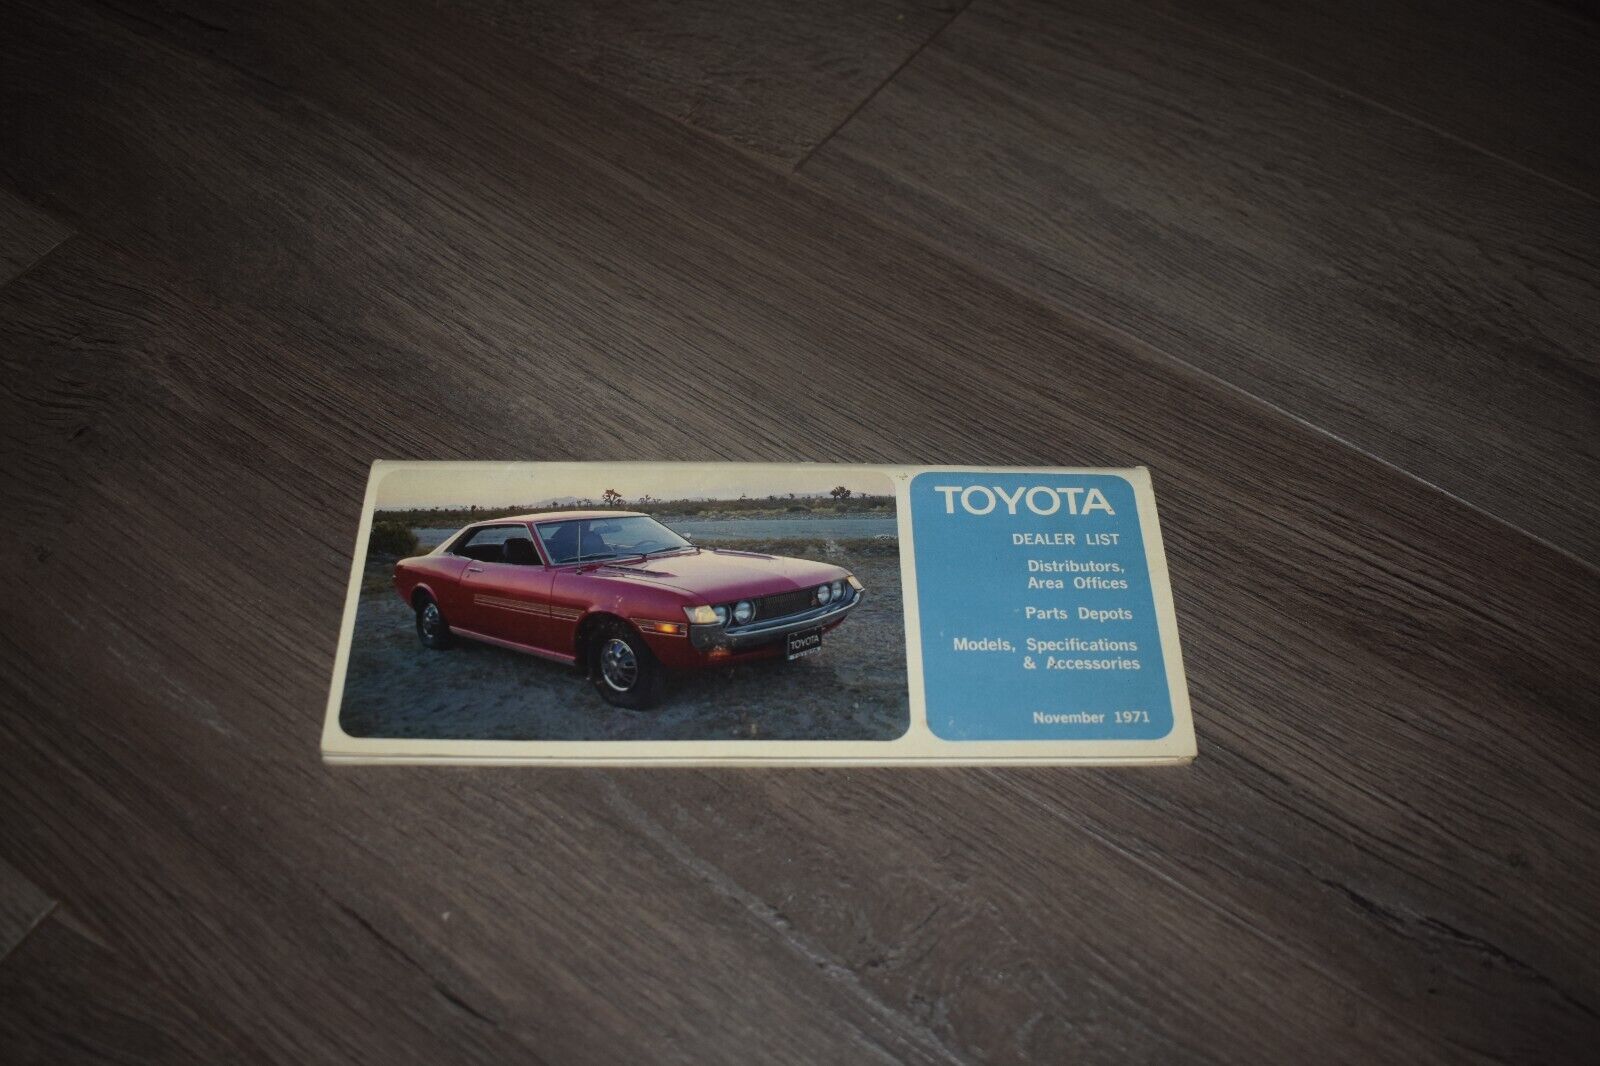 1972 Toyota dealer list model guide w specs & accessories Celica Corolla Cruiser